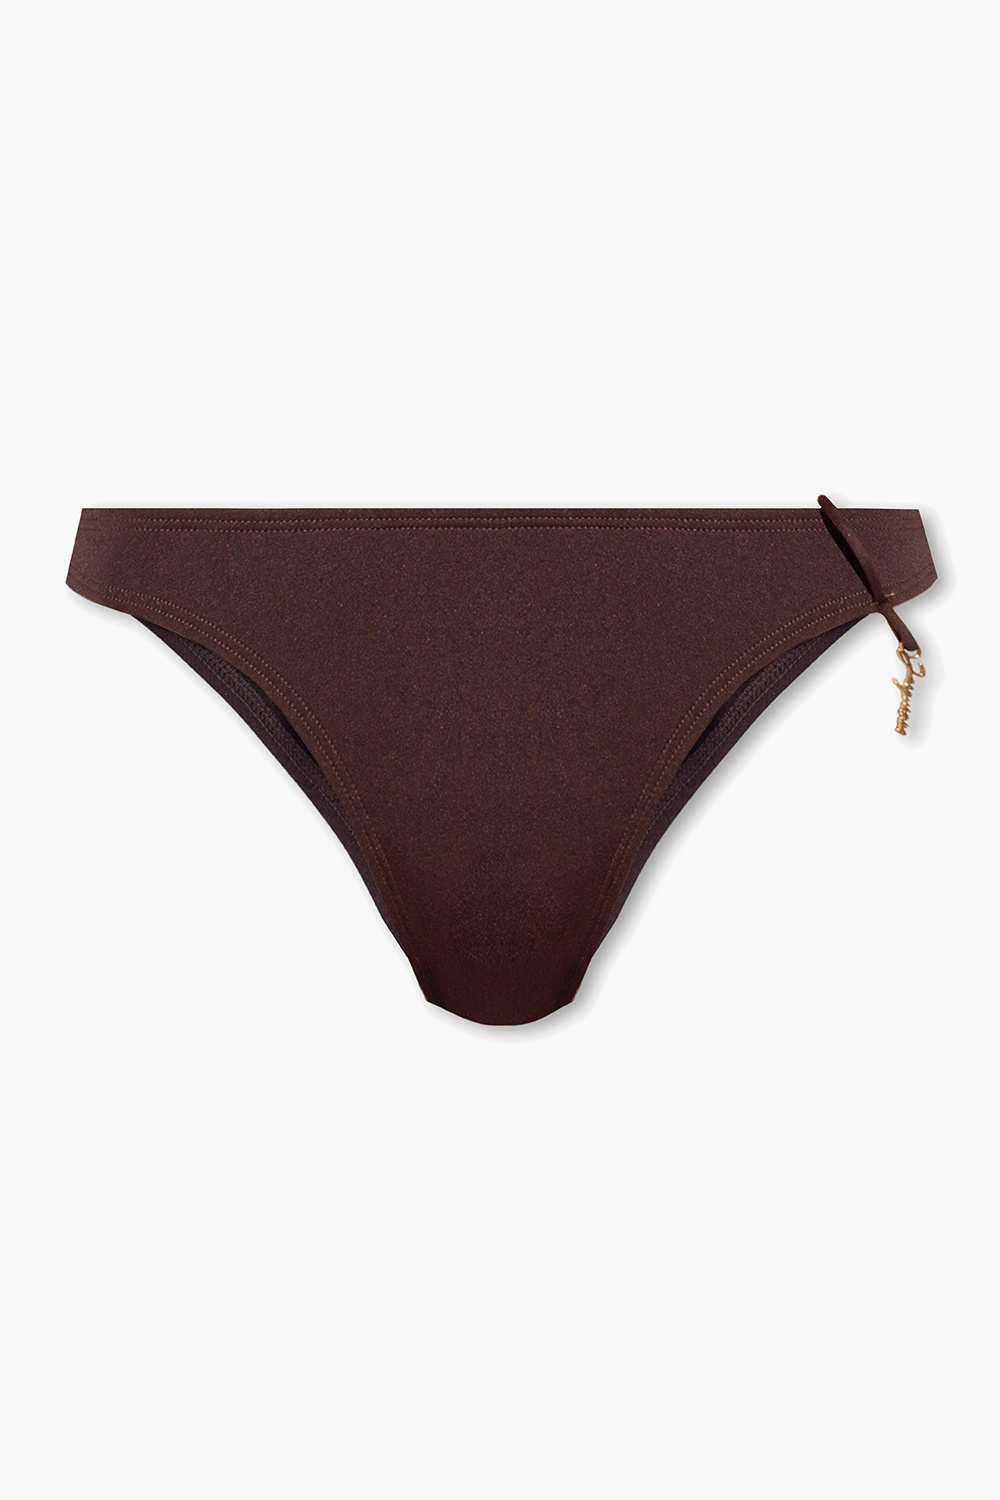 Jacquemus Swimsuit bottom